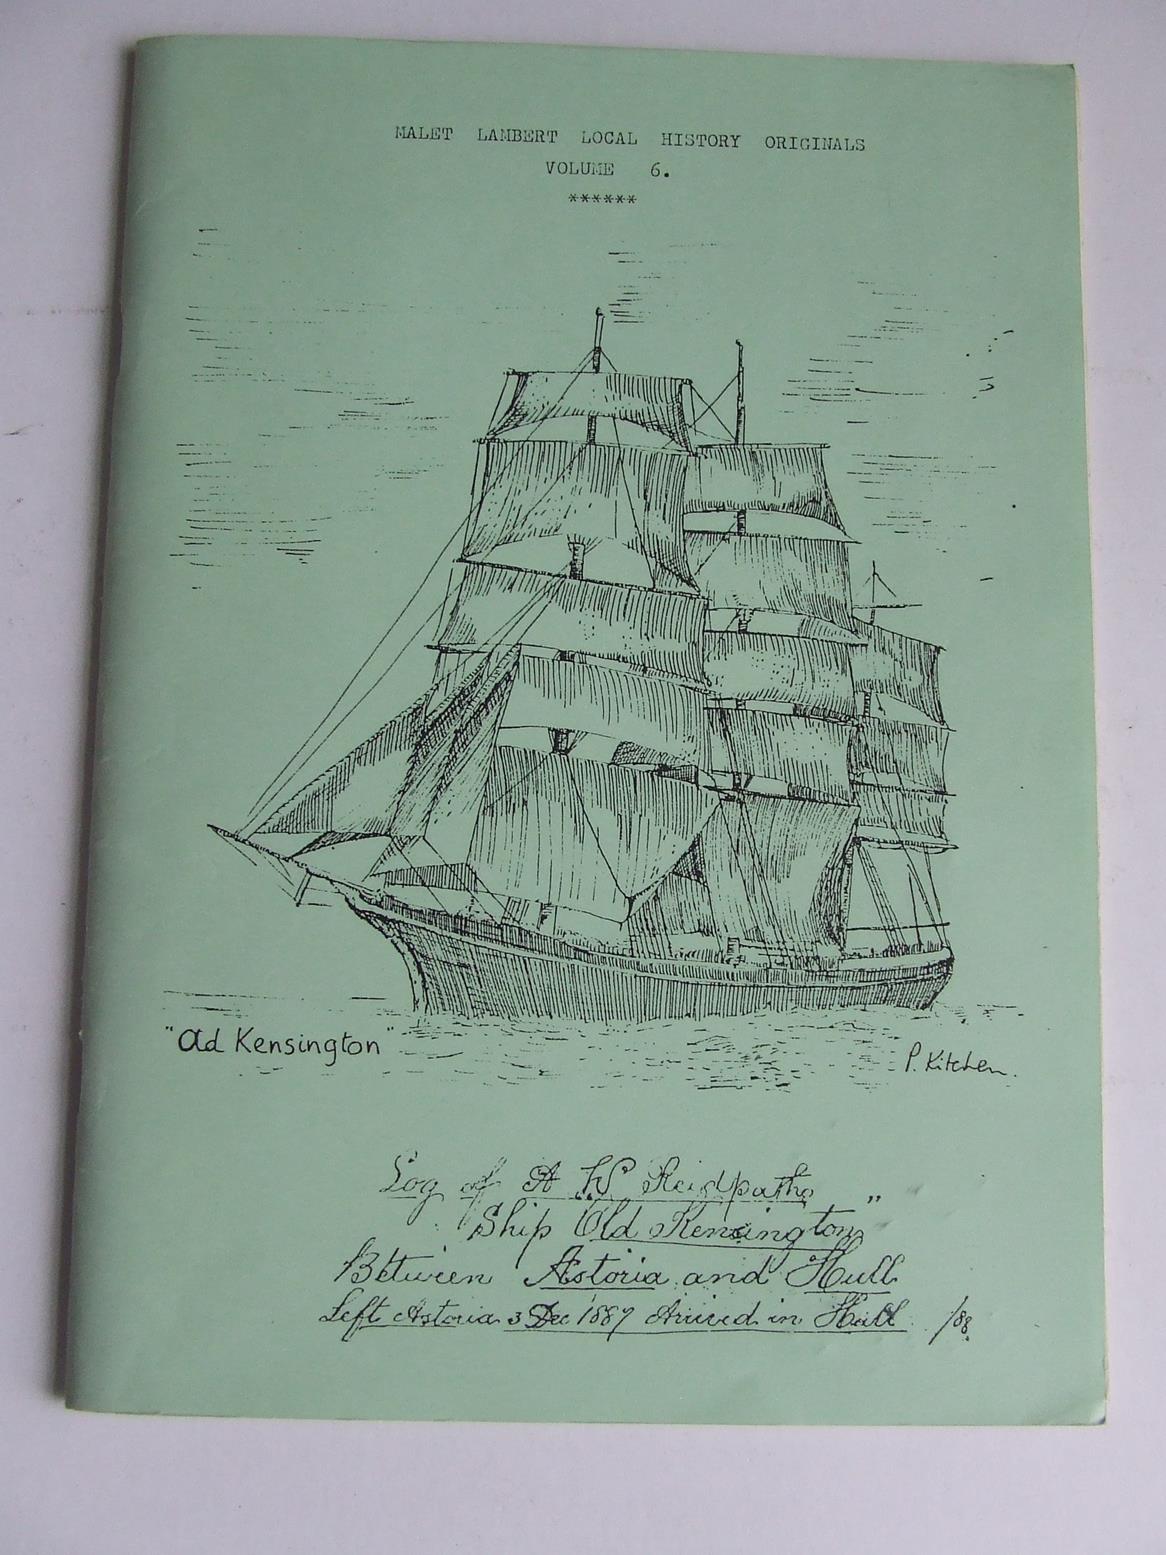 Log of A.W. Reidpath's Ship "Old Kensington" between Astoria and Hull